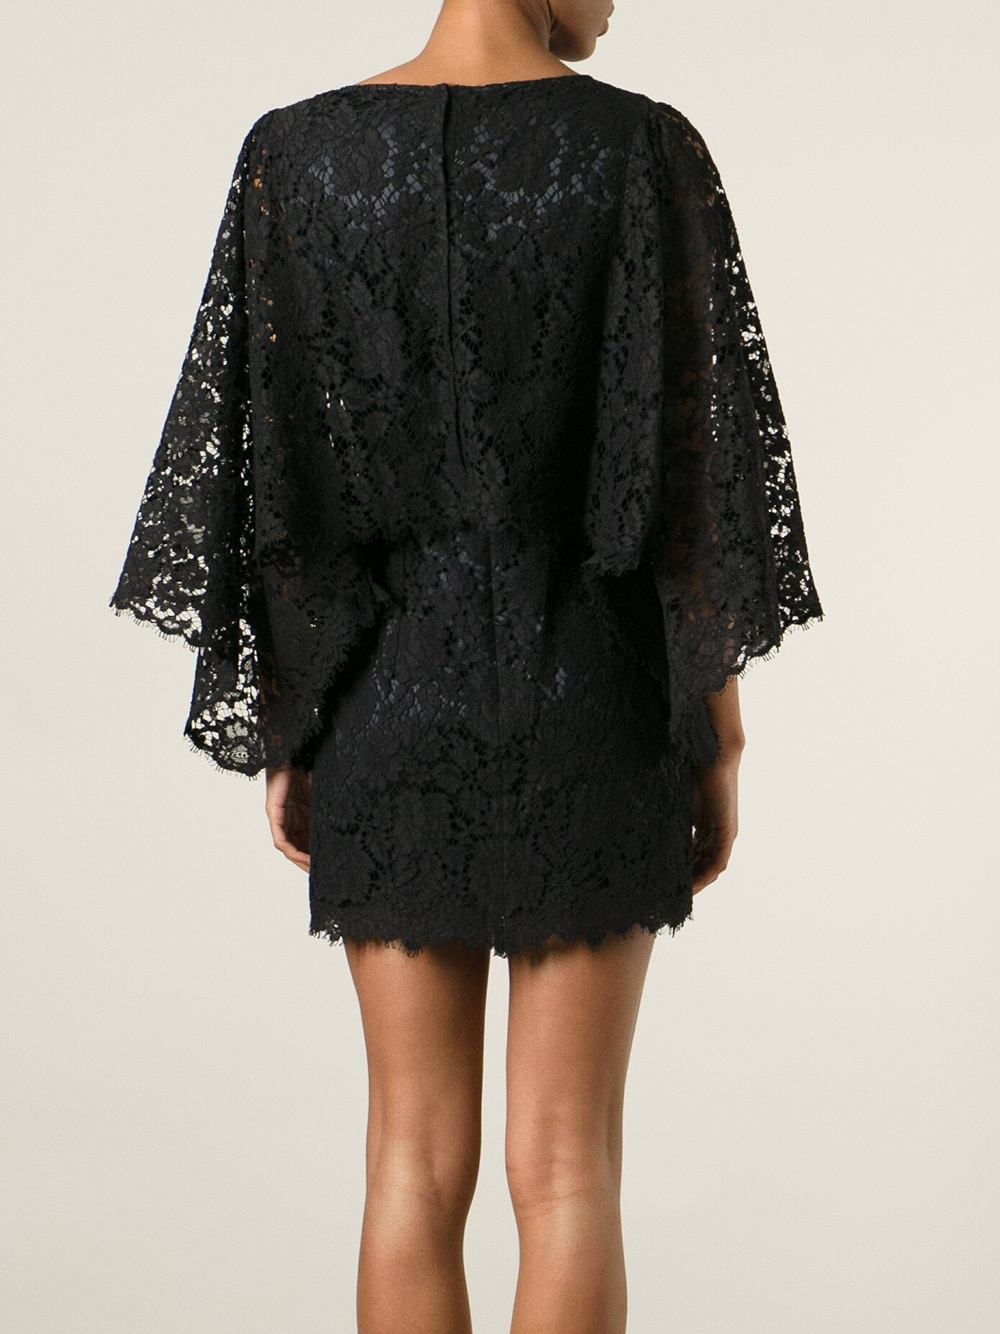 Lyst - Dolce & Gabbana Floral Lace Mini Dress in Black